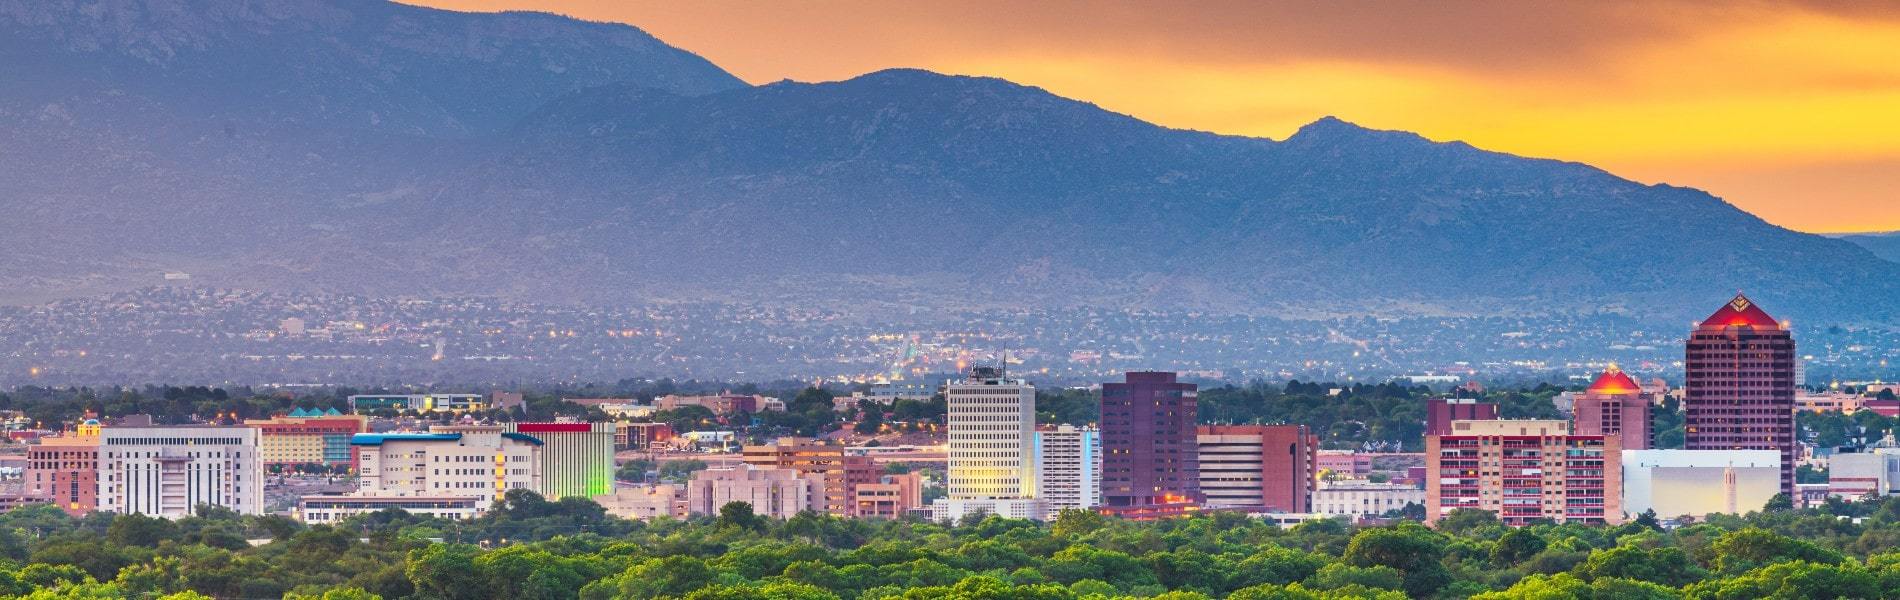 View of Albuquerque real estate